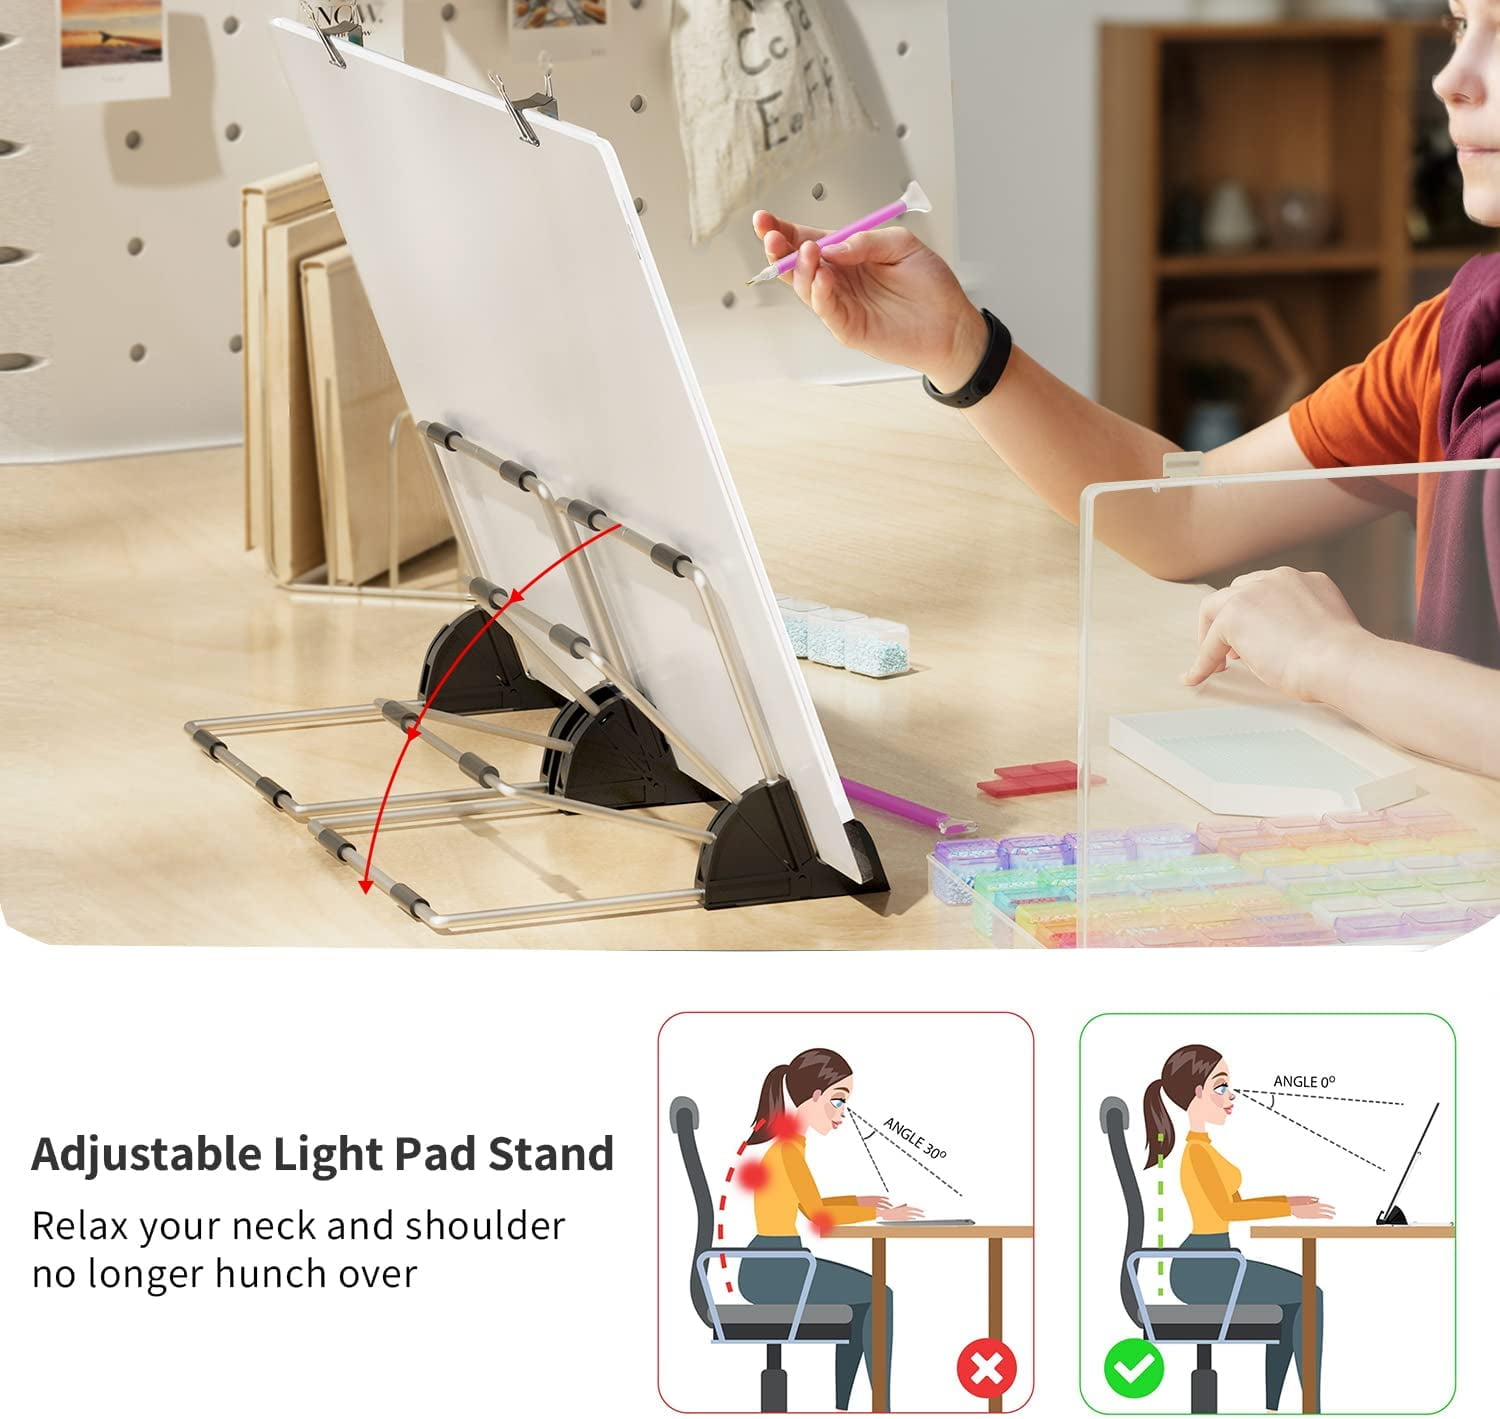 ARTDOT A3 LED Light Board for Diamond Painting Kits, USB Powered Light Pad, Adjustable Brightness with Diamond Painting Tools Detachable Stand and